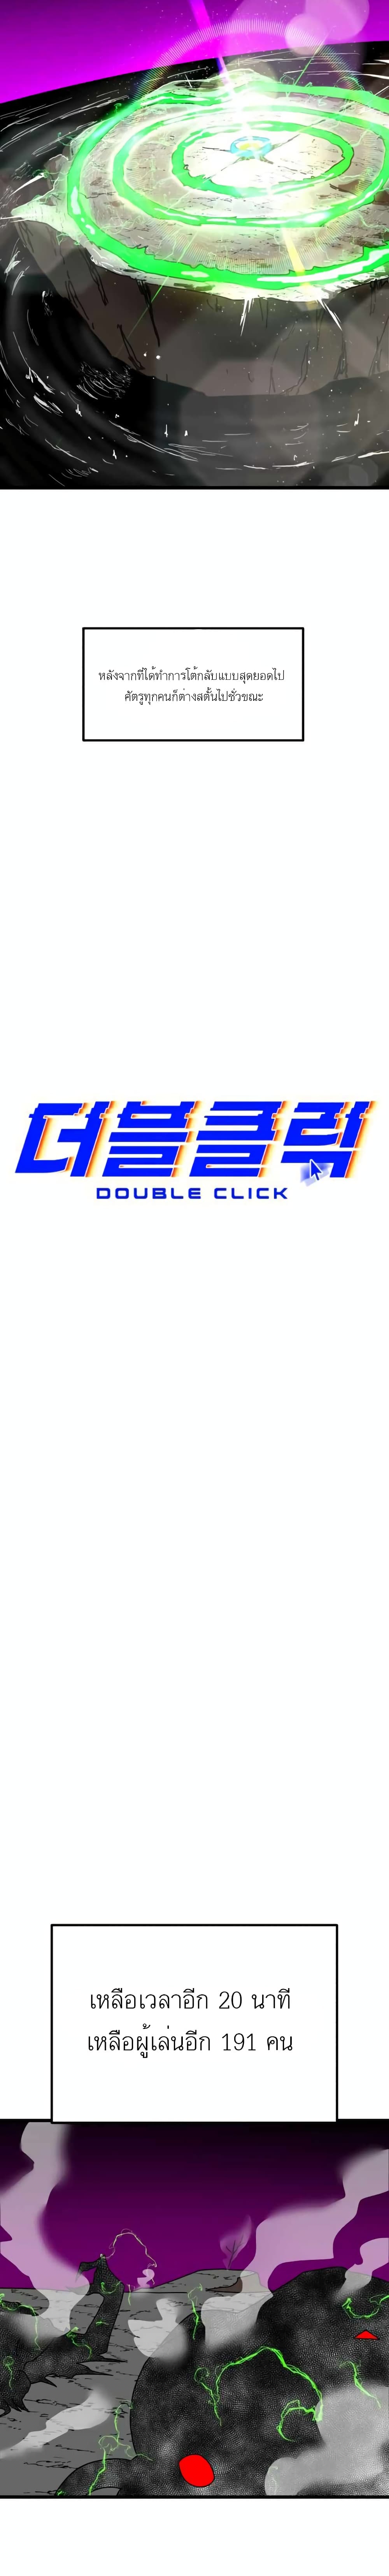 Double-Click-36_19.jpg